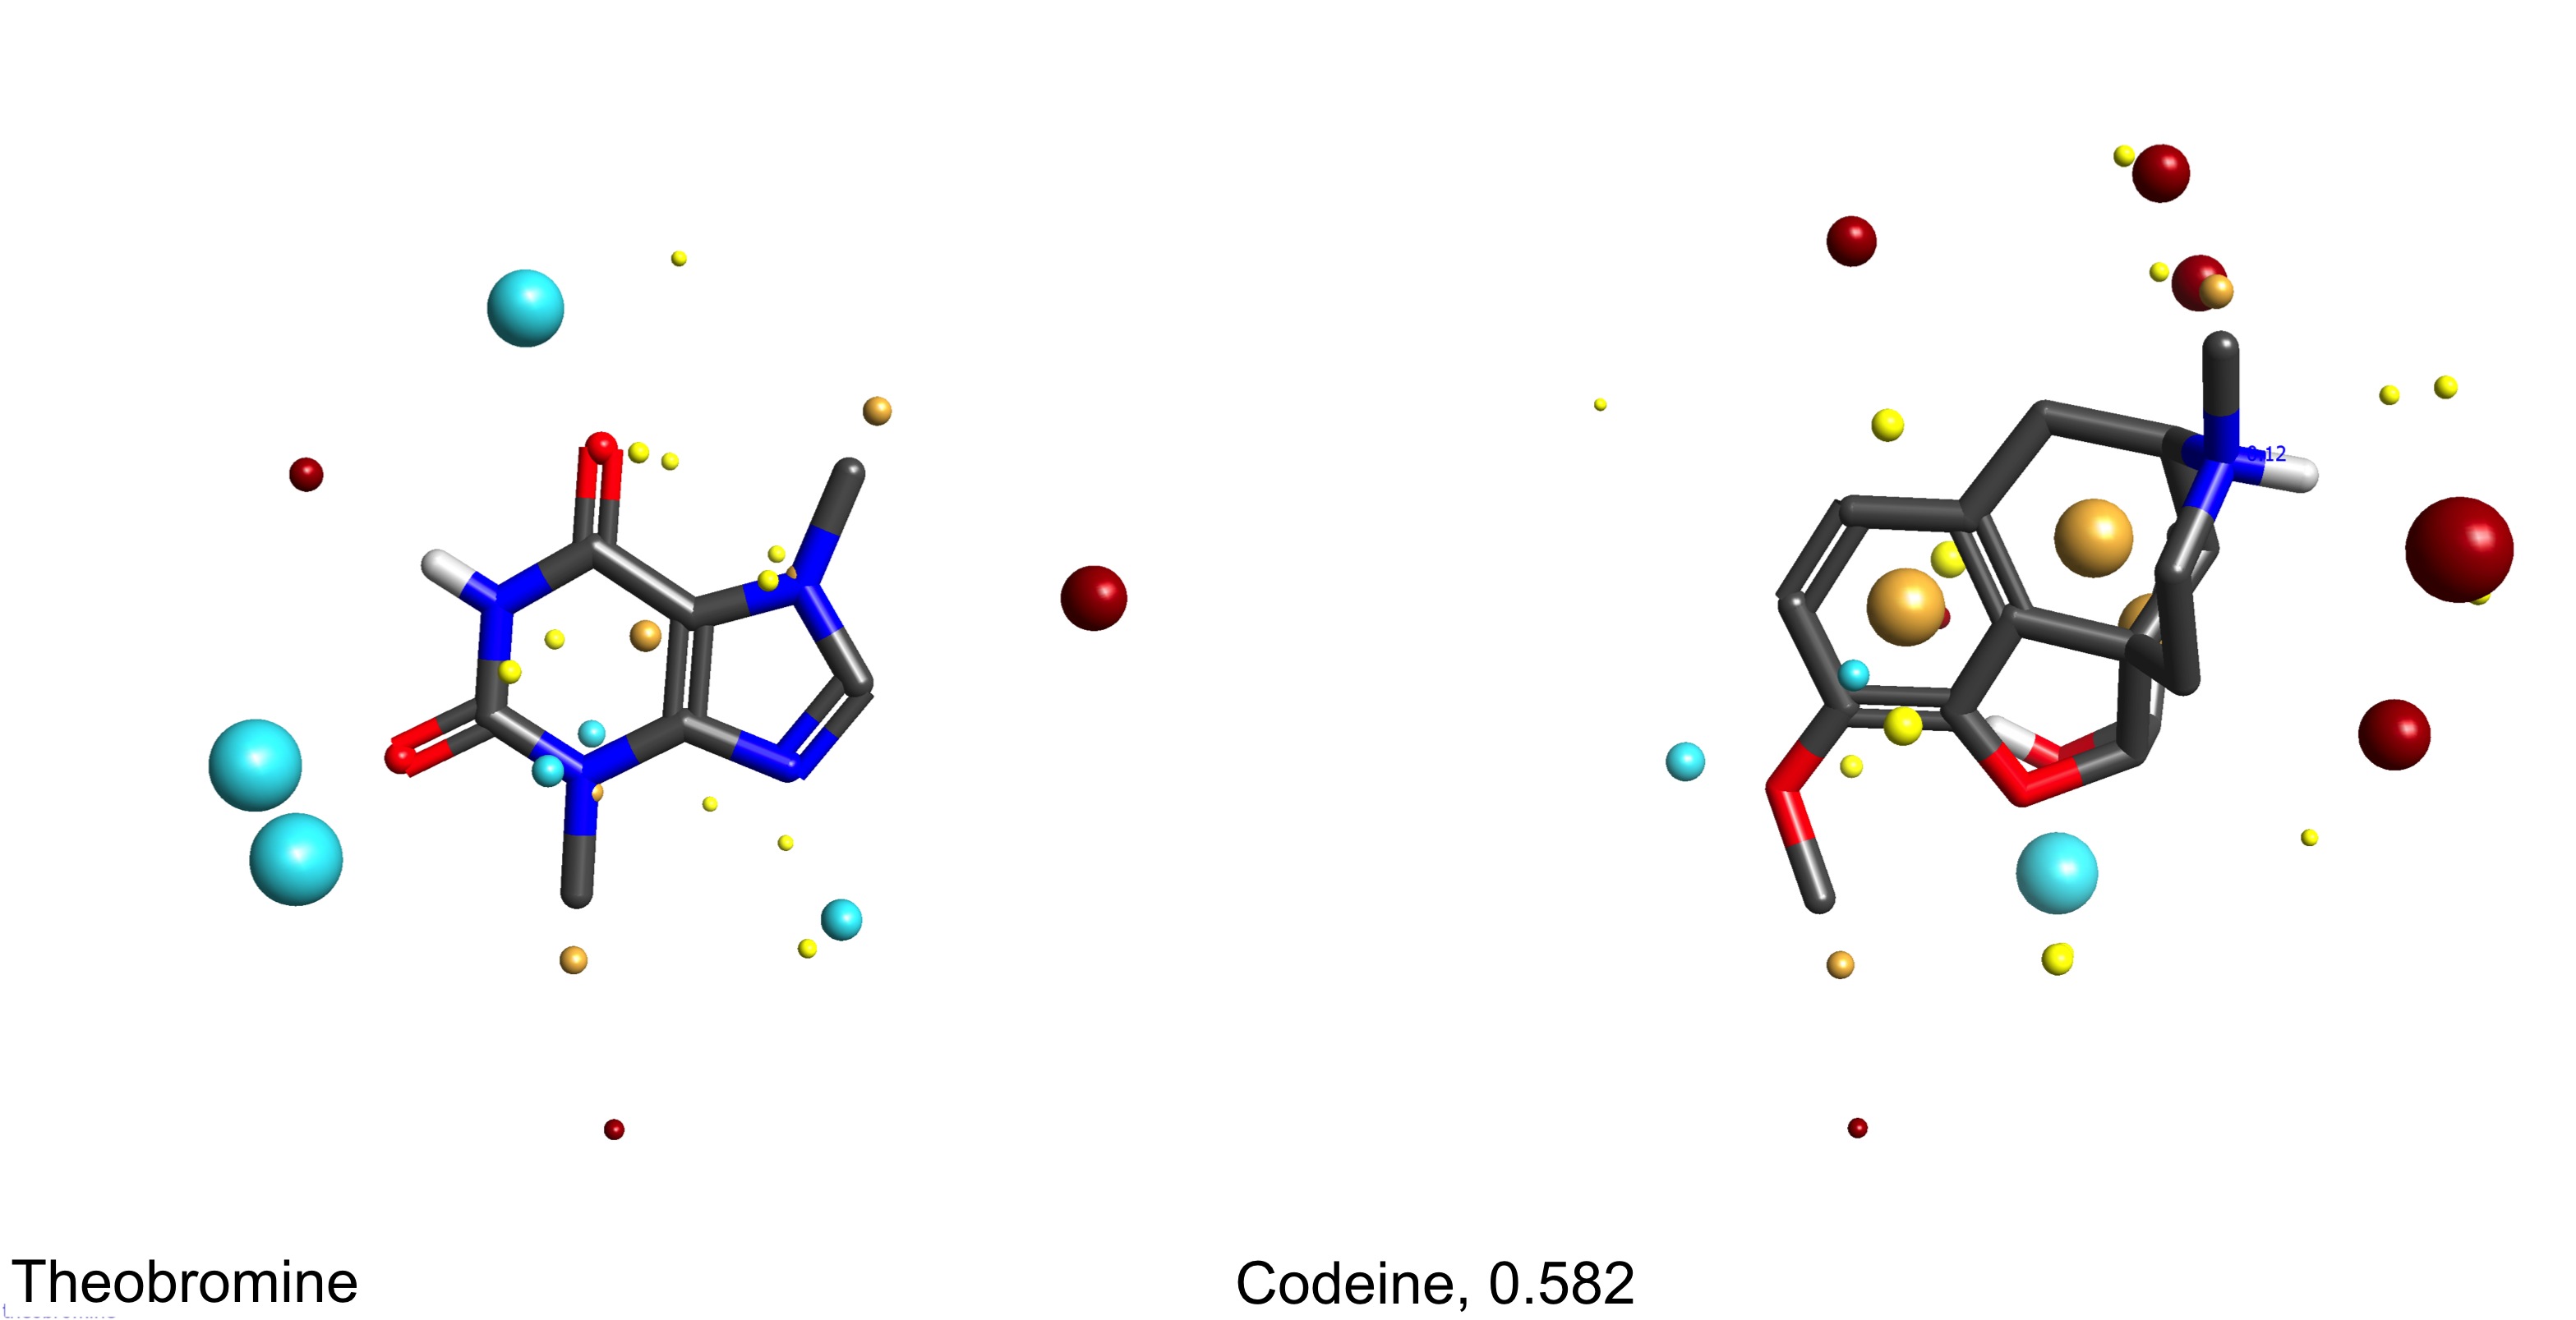 Theobromine with codeine